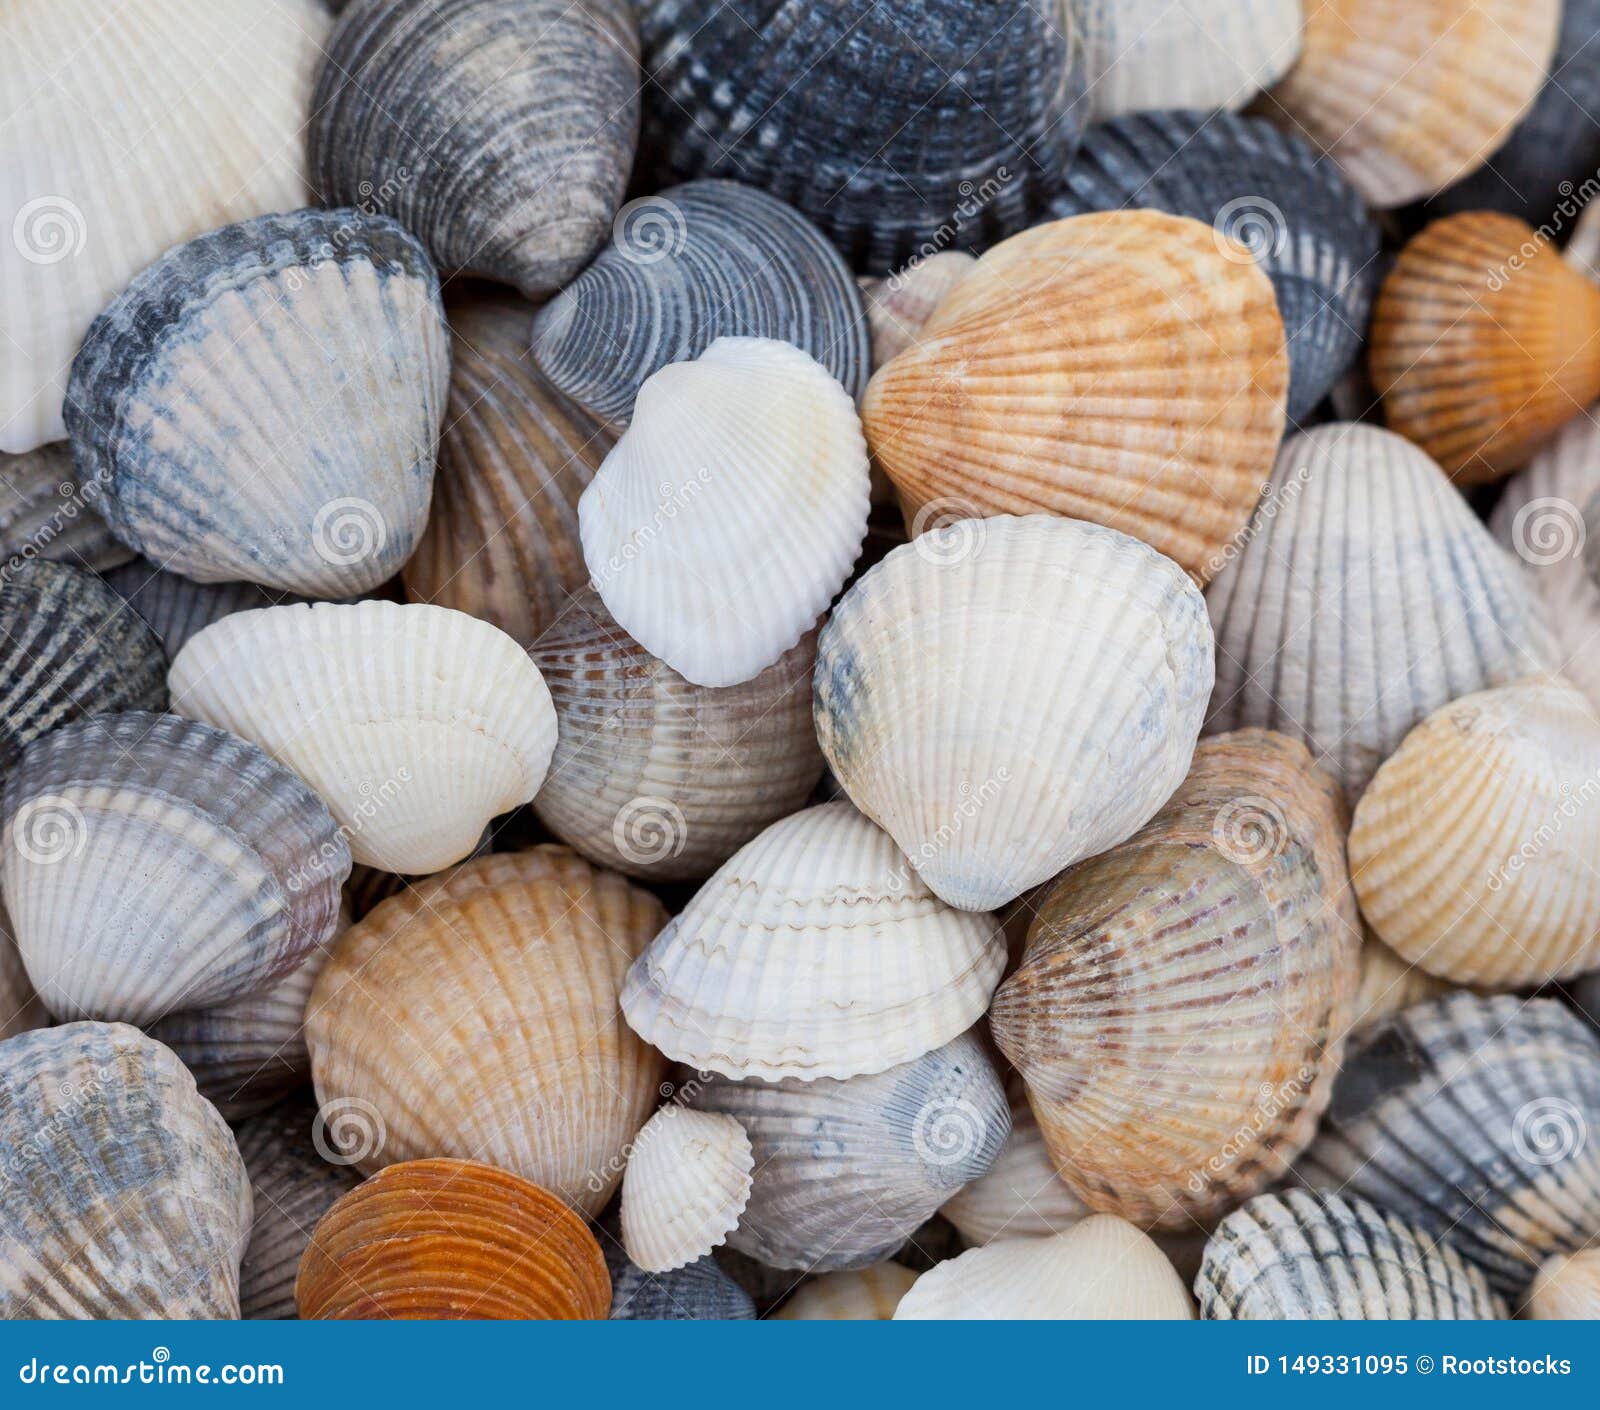 Seashells Mollusk skorupy. Seashells of different colors. Mollusk shells. Seashell background. Texture of the shells